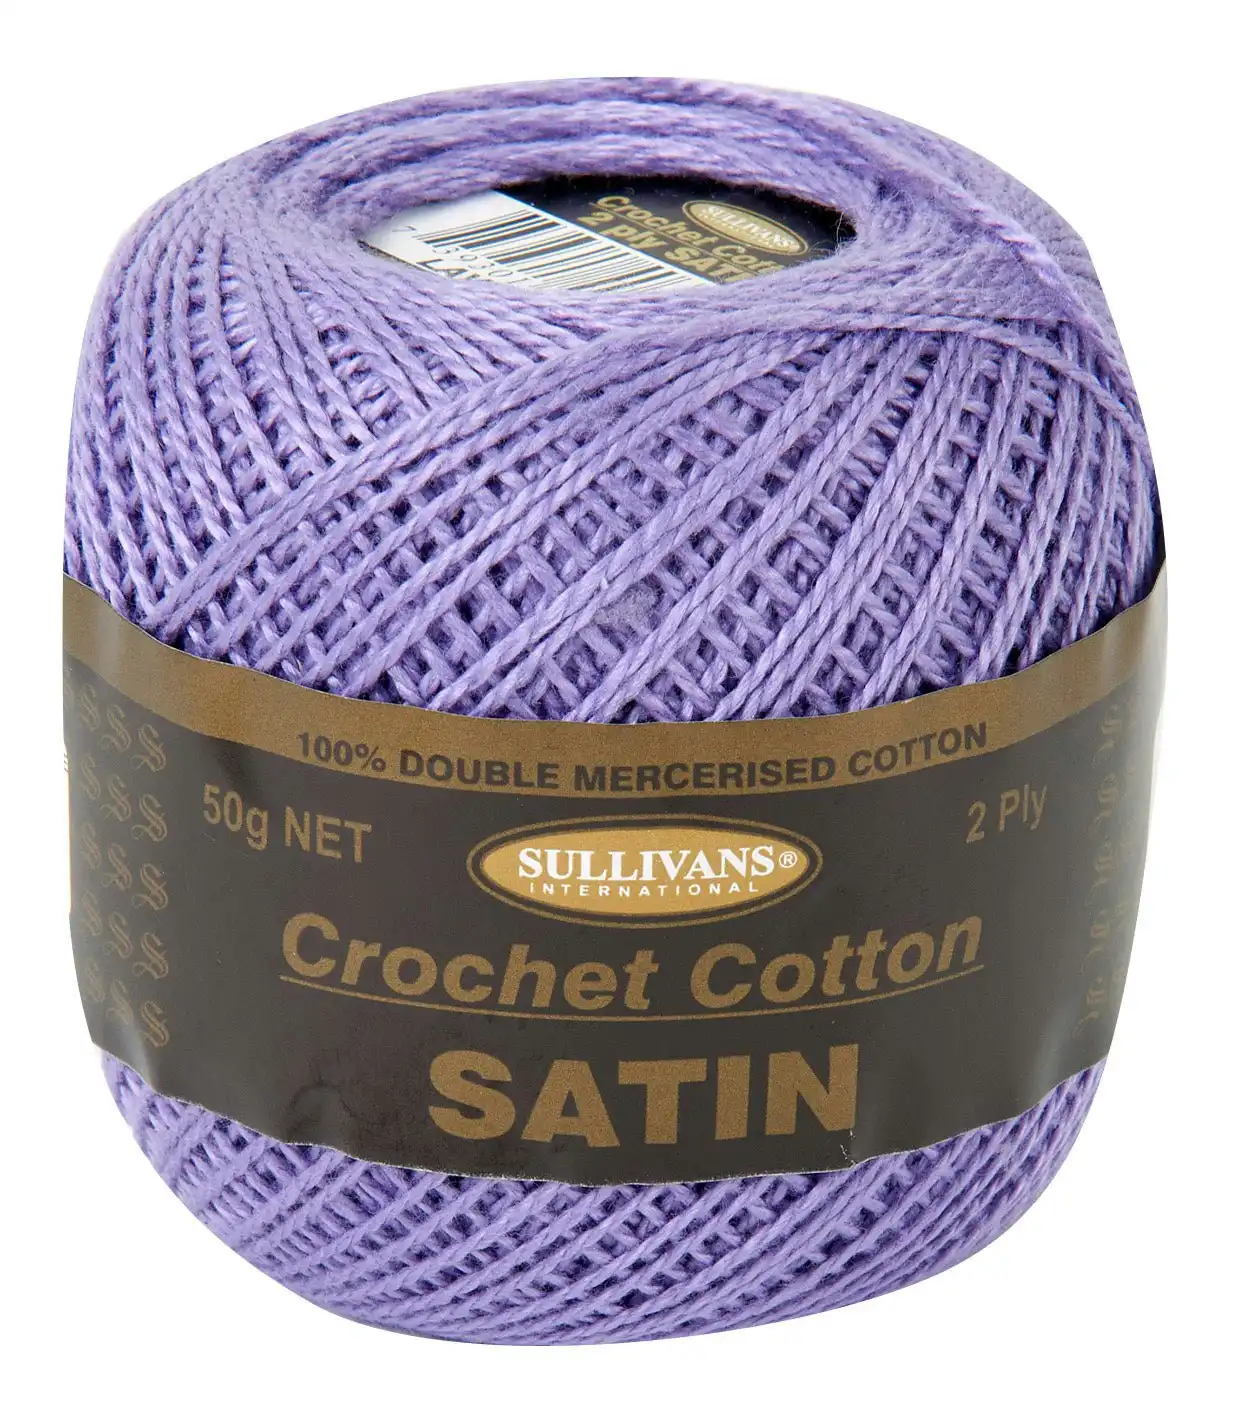 Sullivans Crochet Yarn 2ply, 50g Cotton Satin Yarn